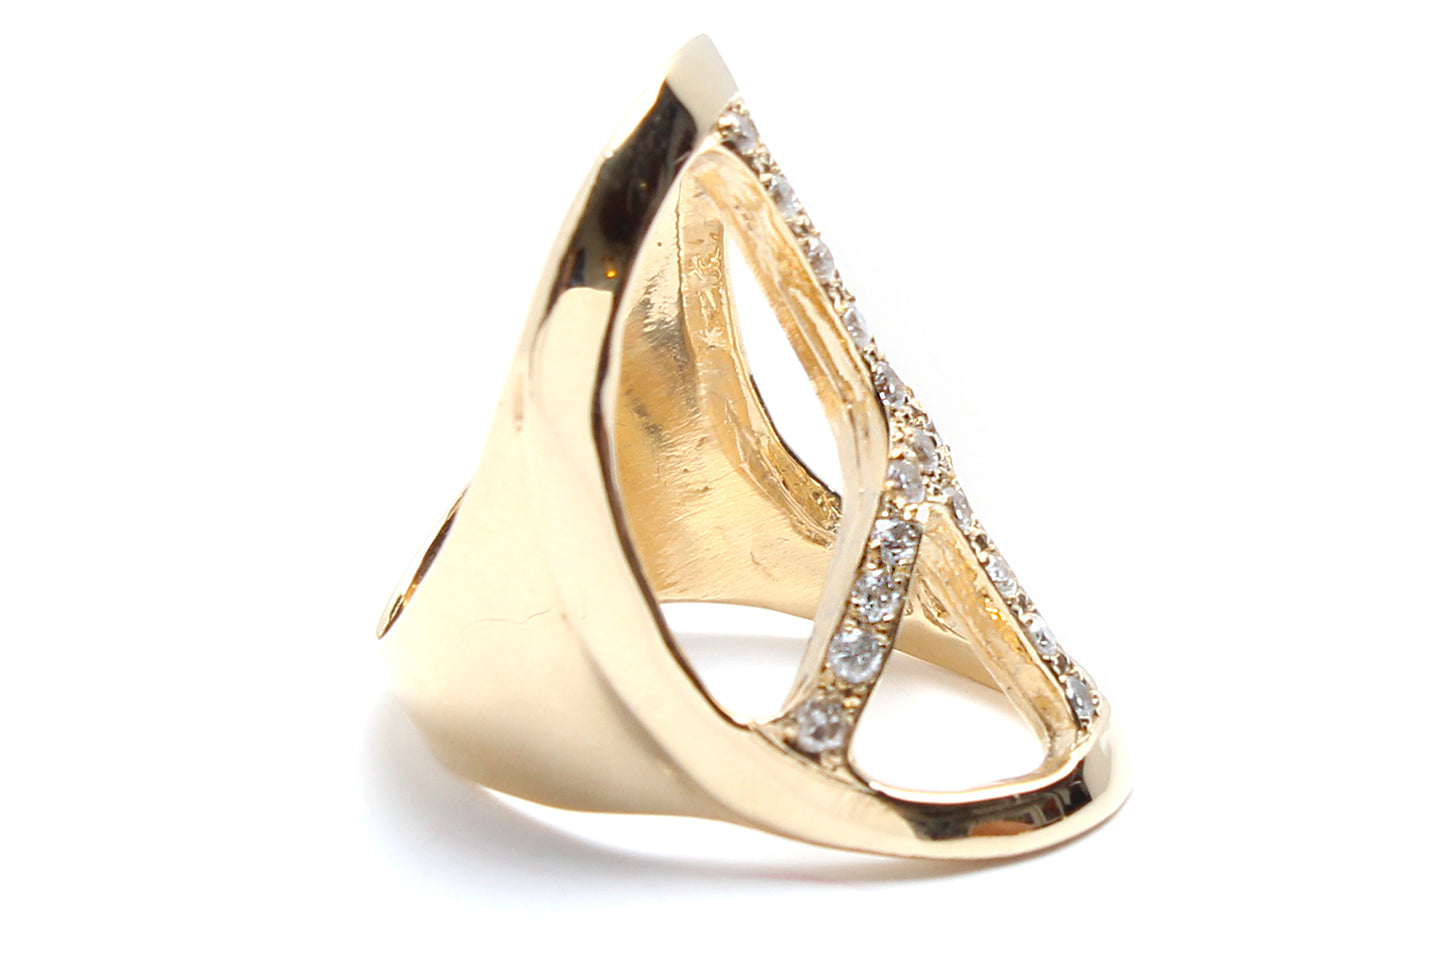 Signature Solid 14 Karat Gold Diamond Peace Ring